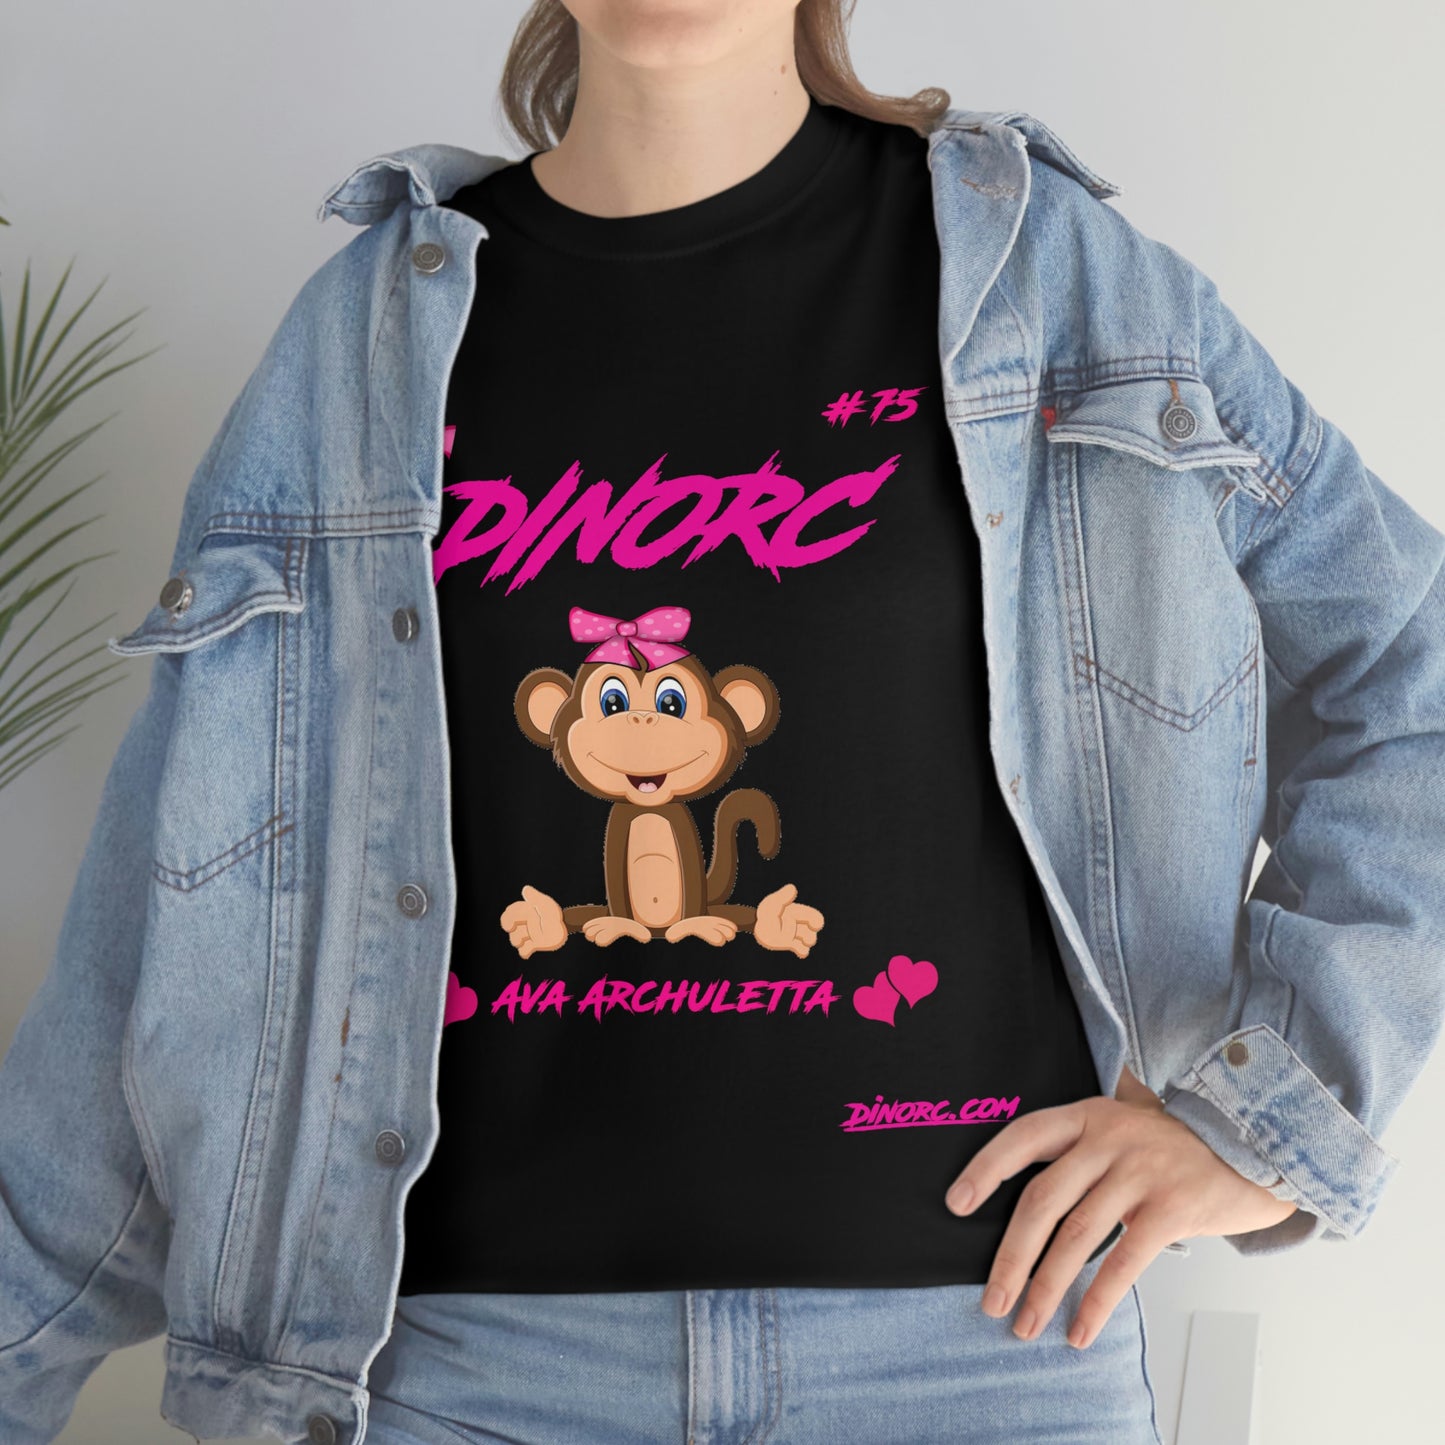 Ava Monkey Front DinoRc Logo T-Shirt S-5x